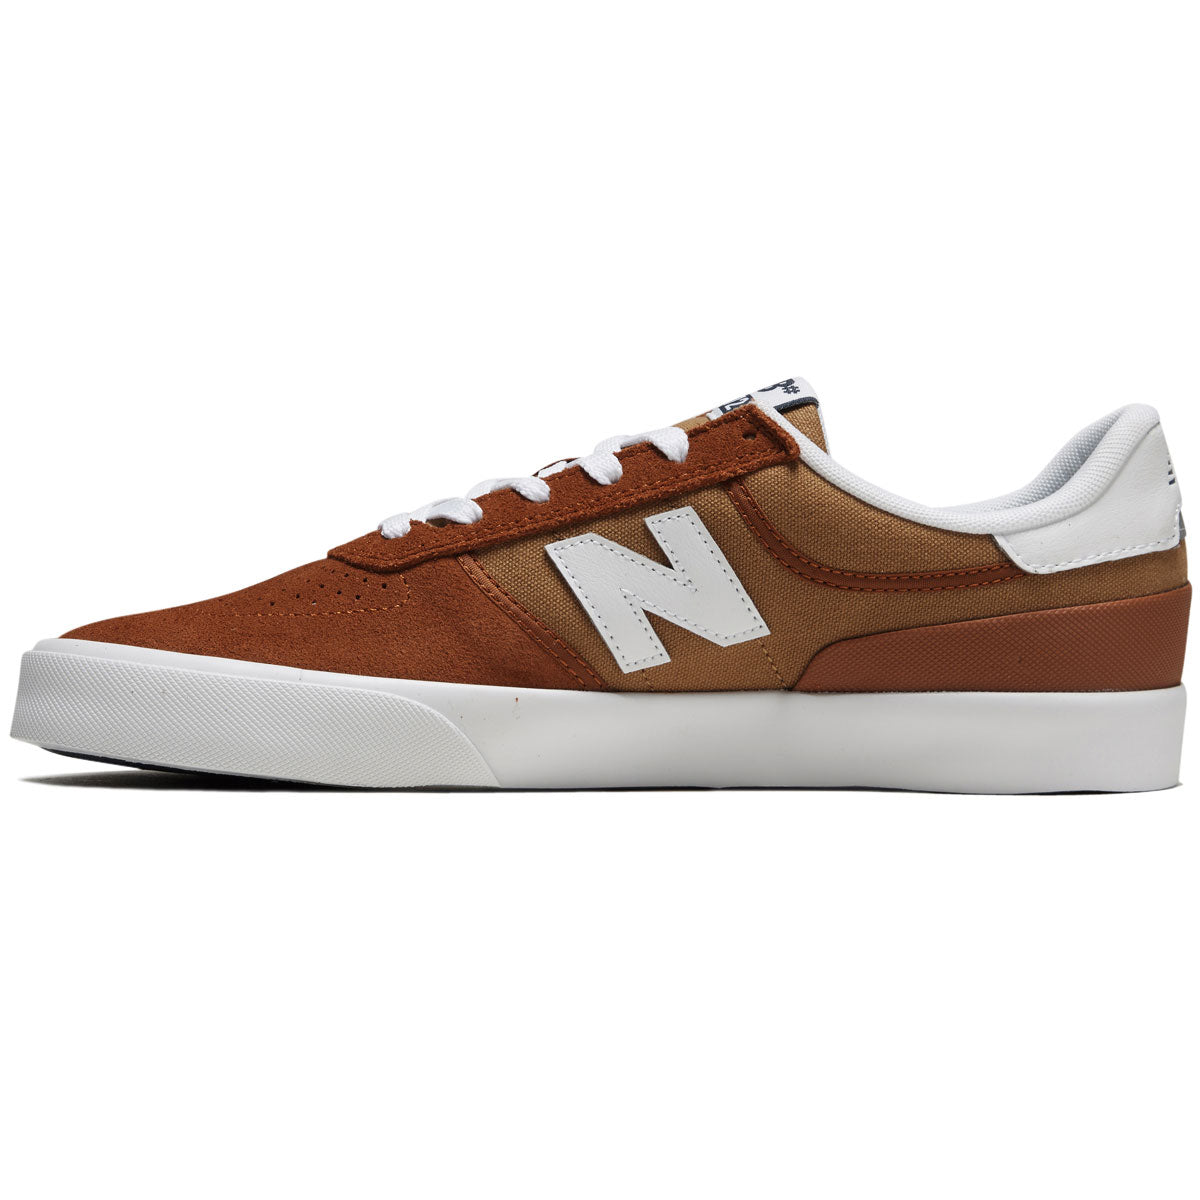 New Balance 272 Shoes - Rust/White image 2